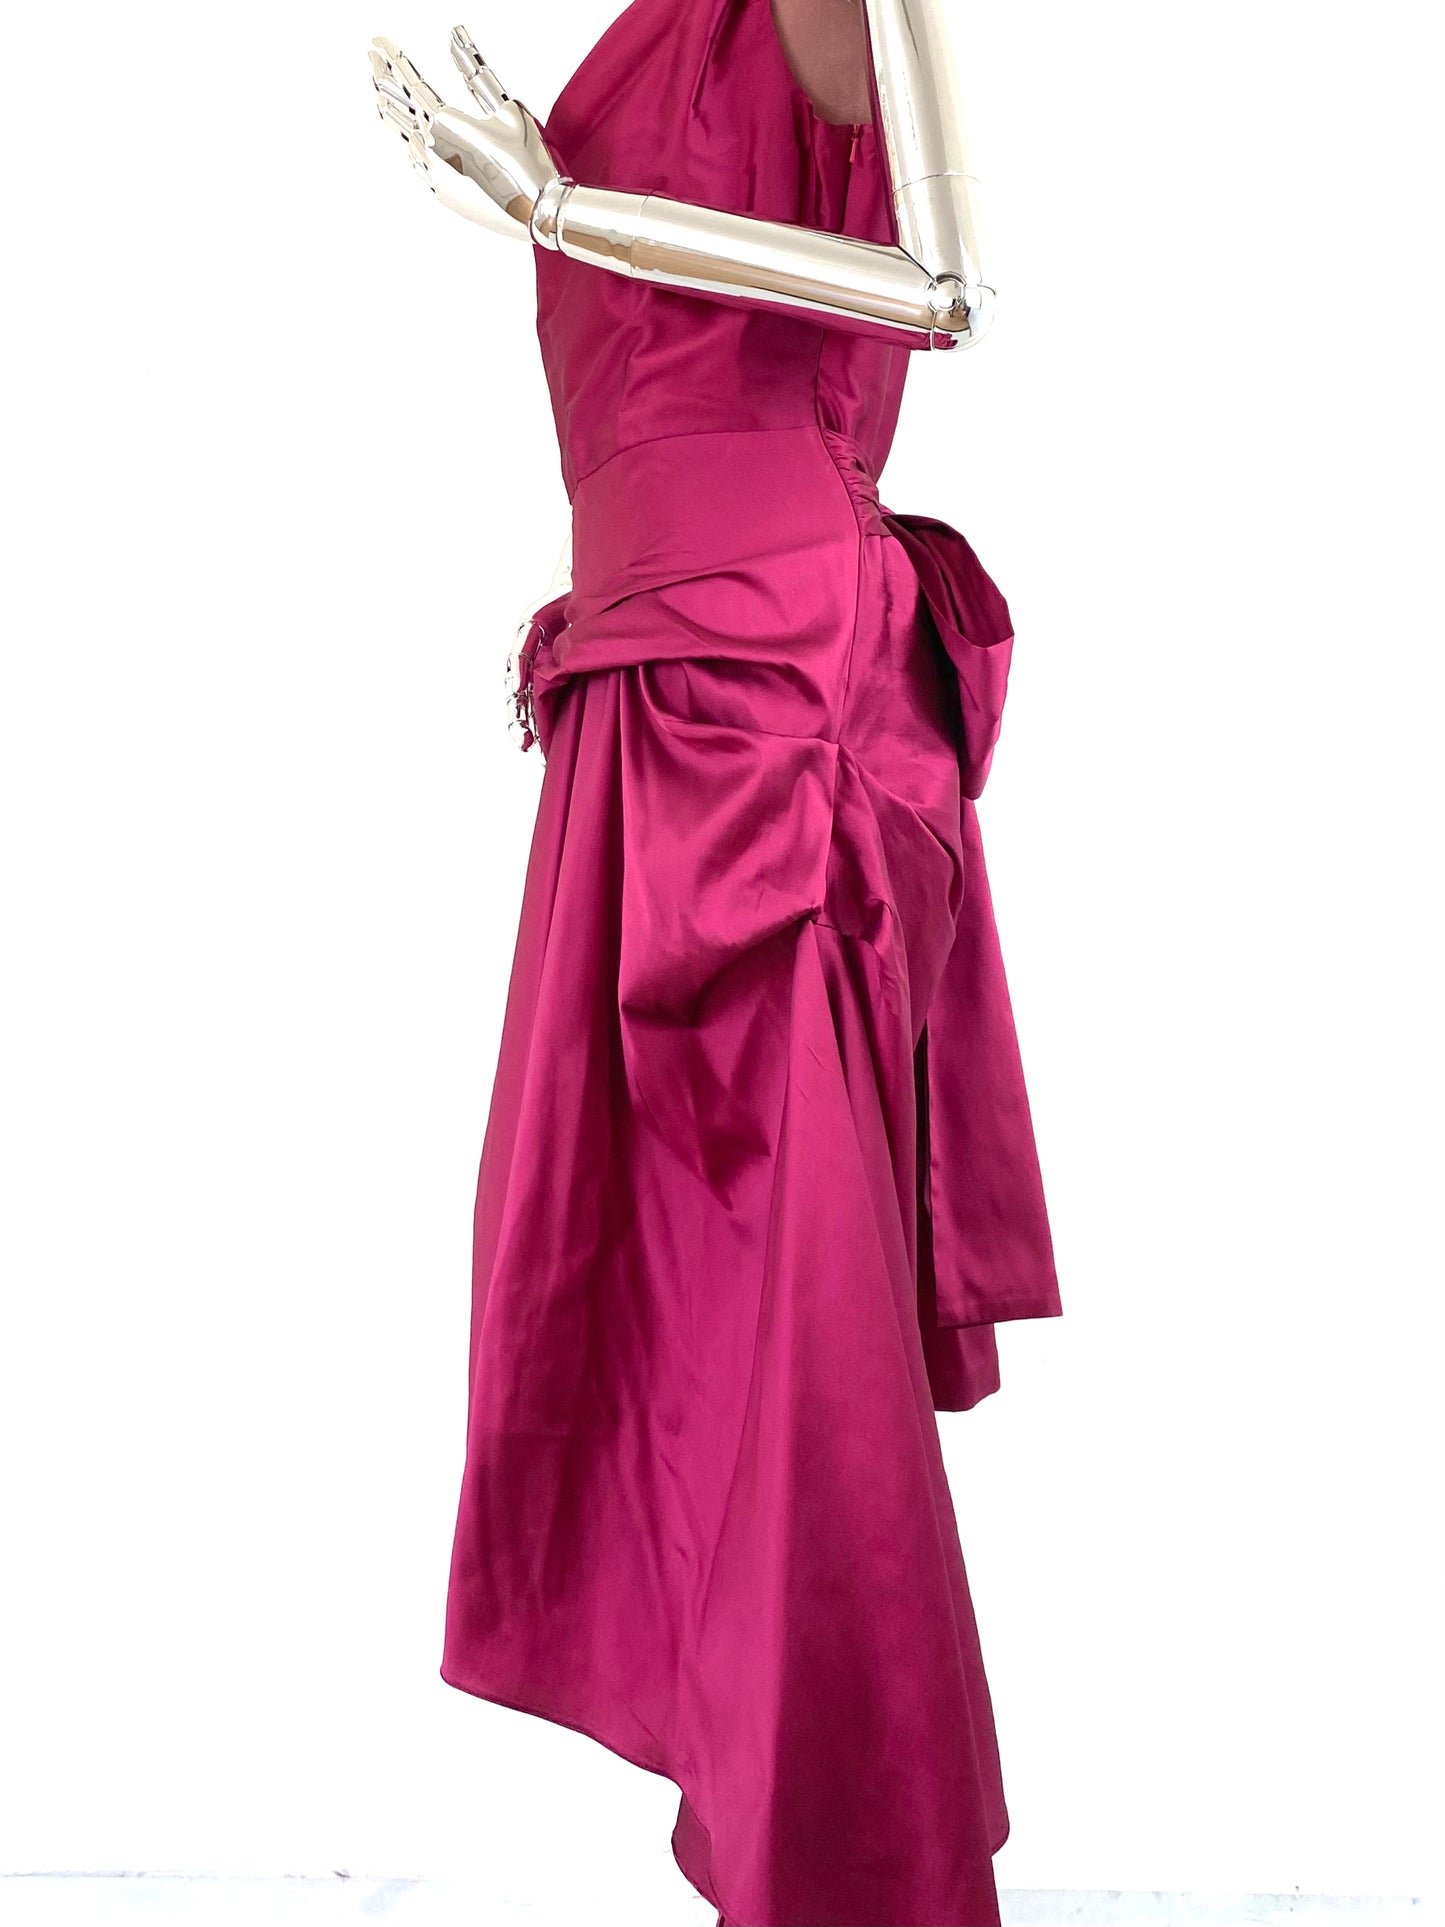 Elizabeth Style Dress  with my signature pleats,Wedding,Party,Evening dress